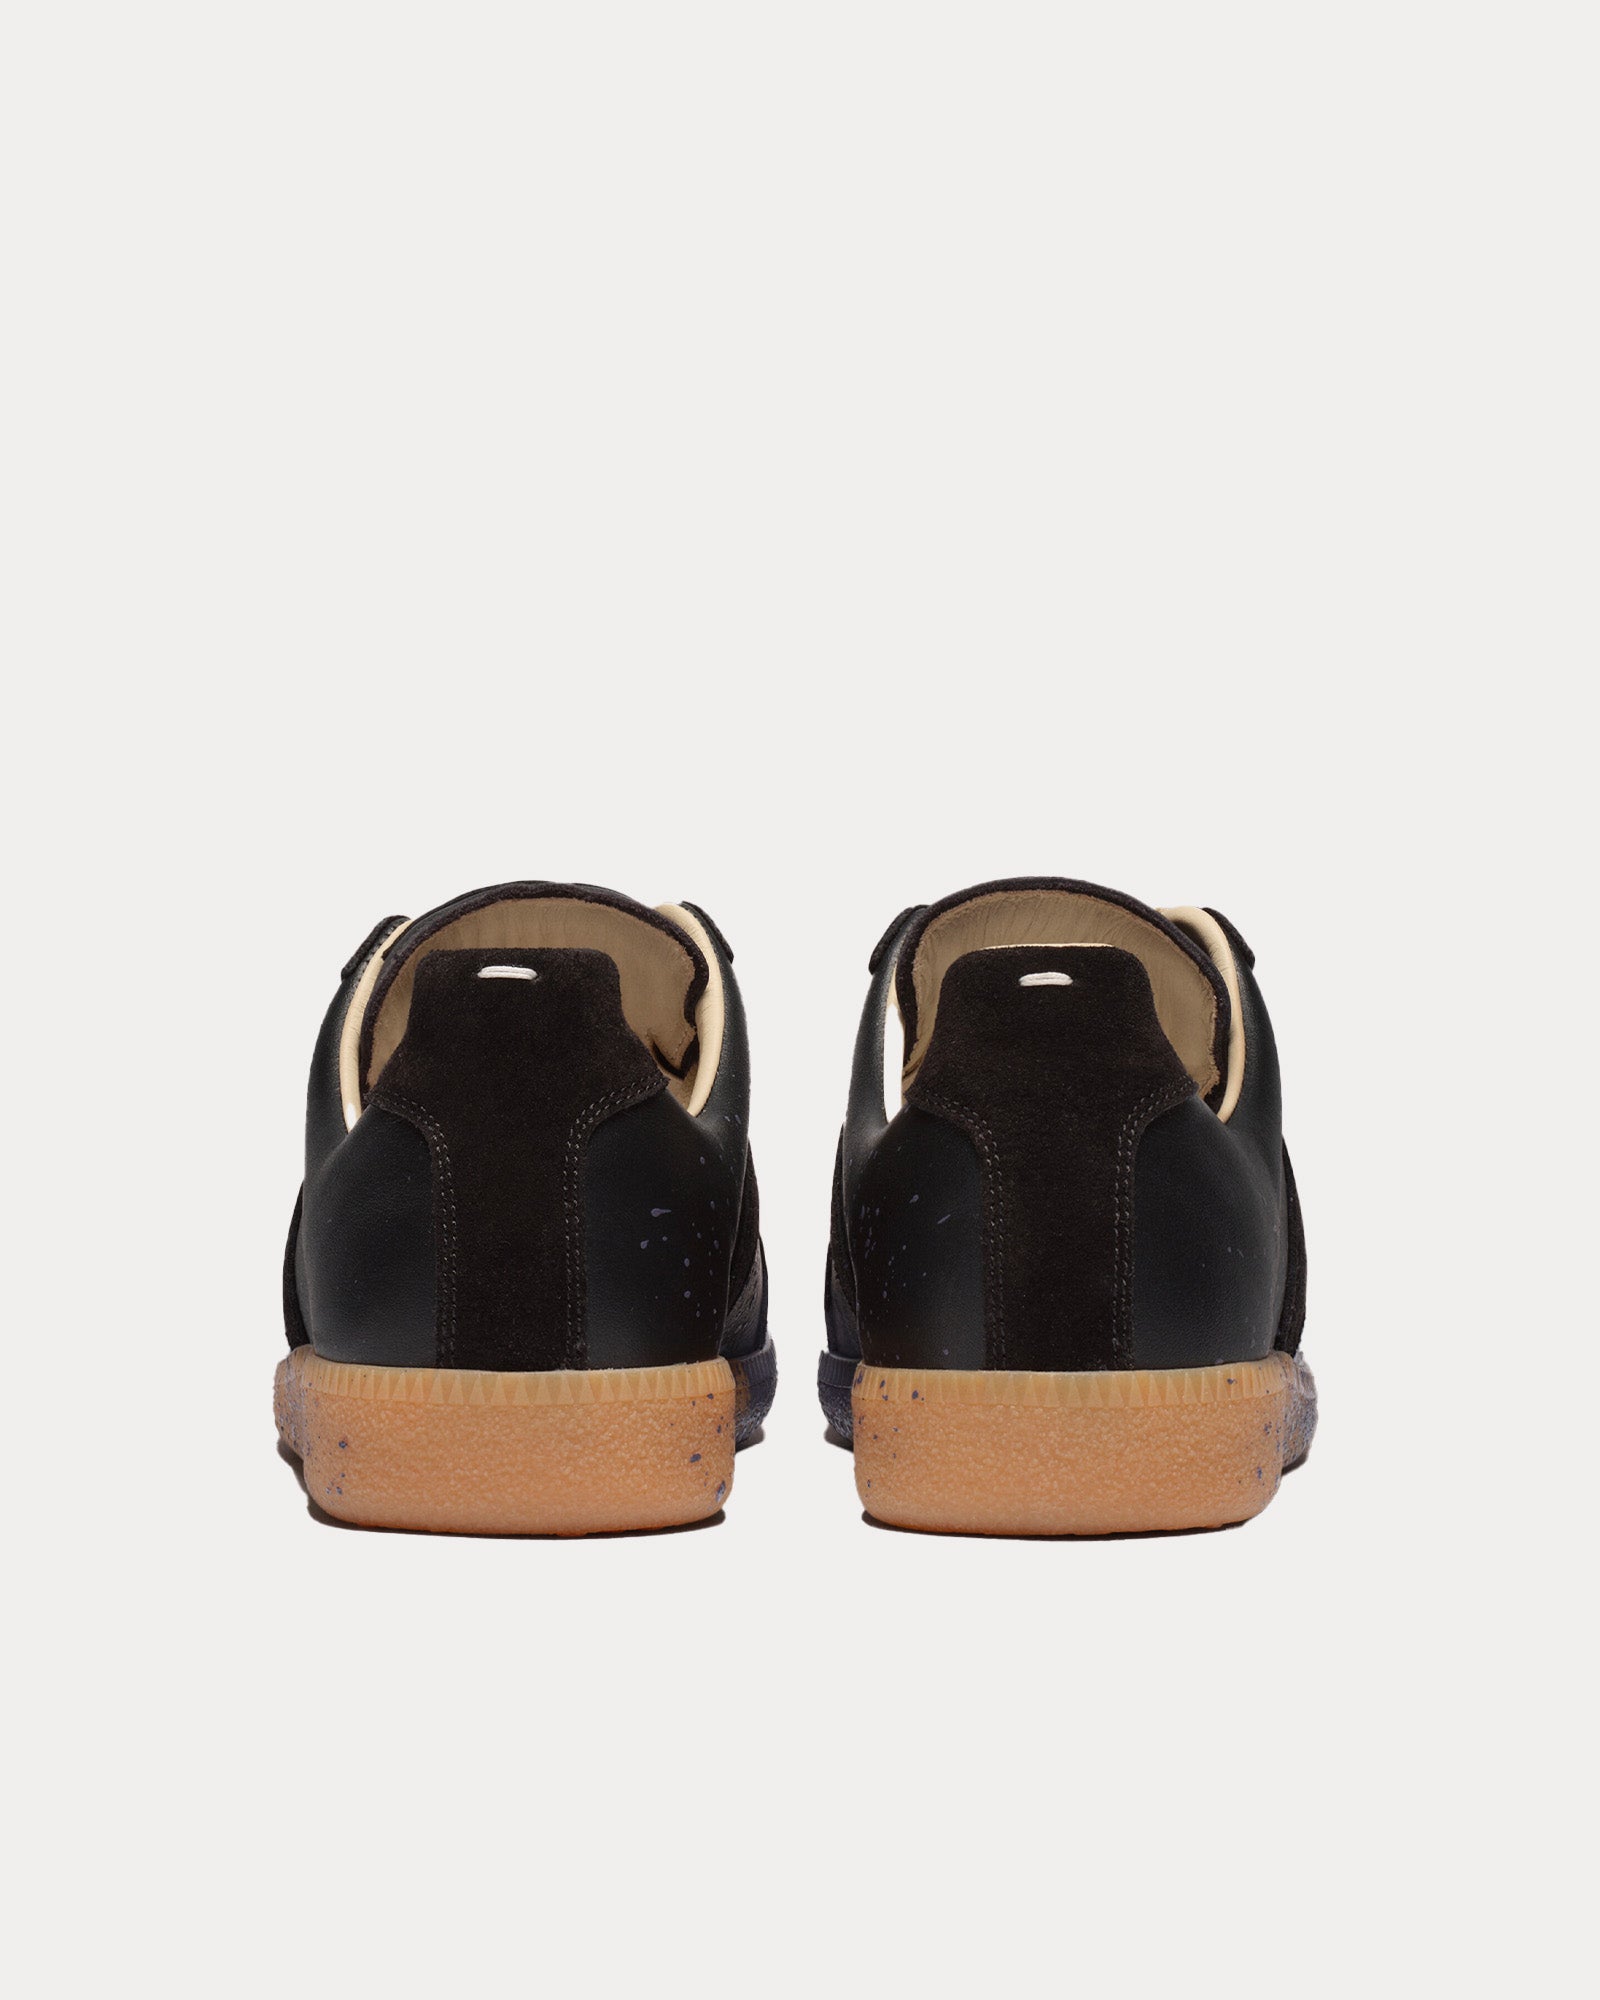 Maison Margiela - Paint Replica Black / Pewter Low Top Sneakers